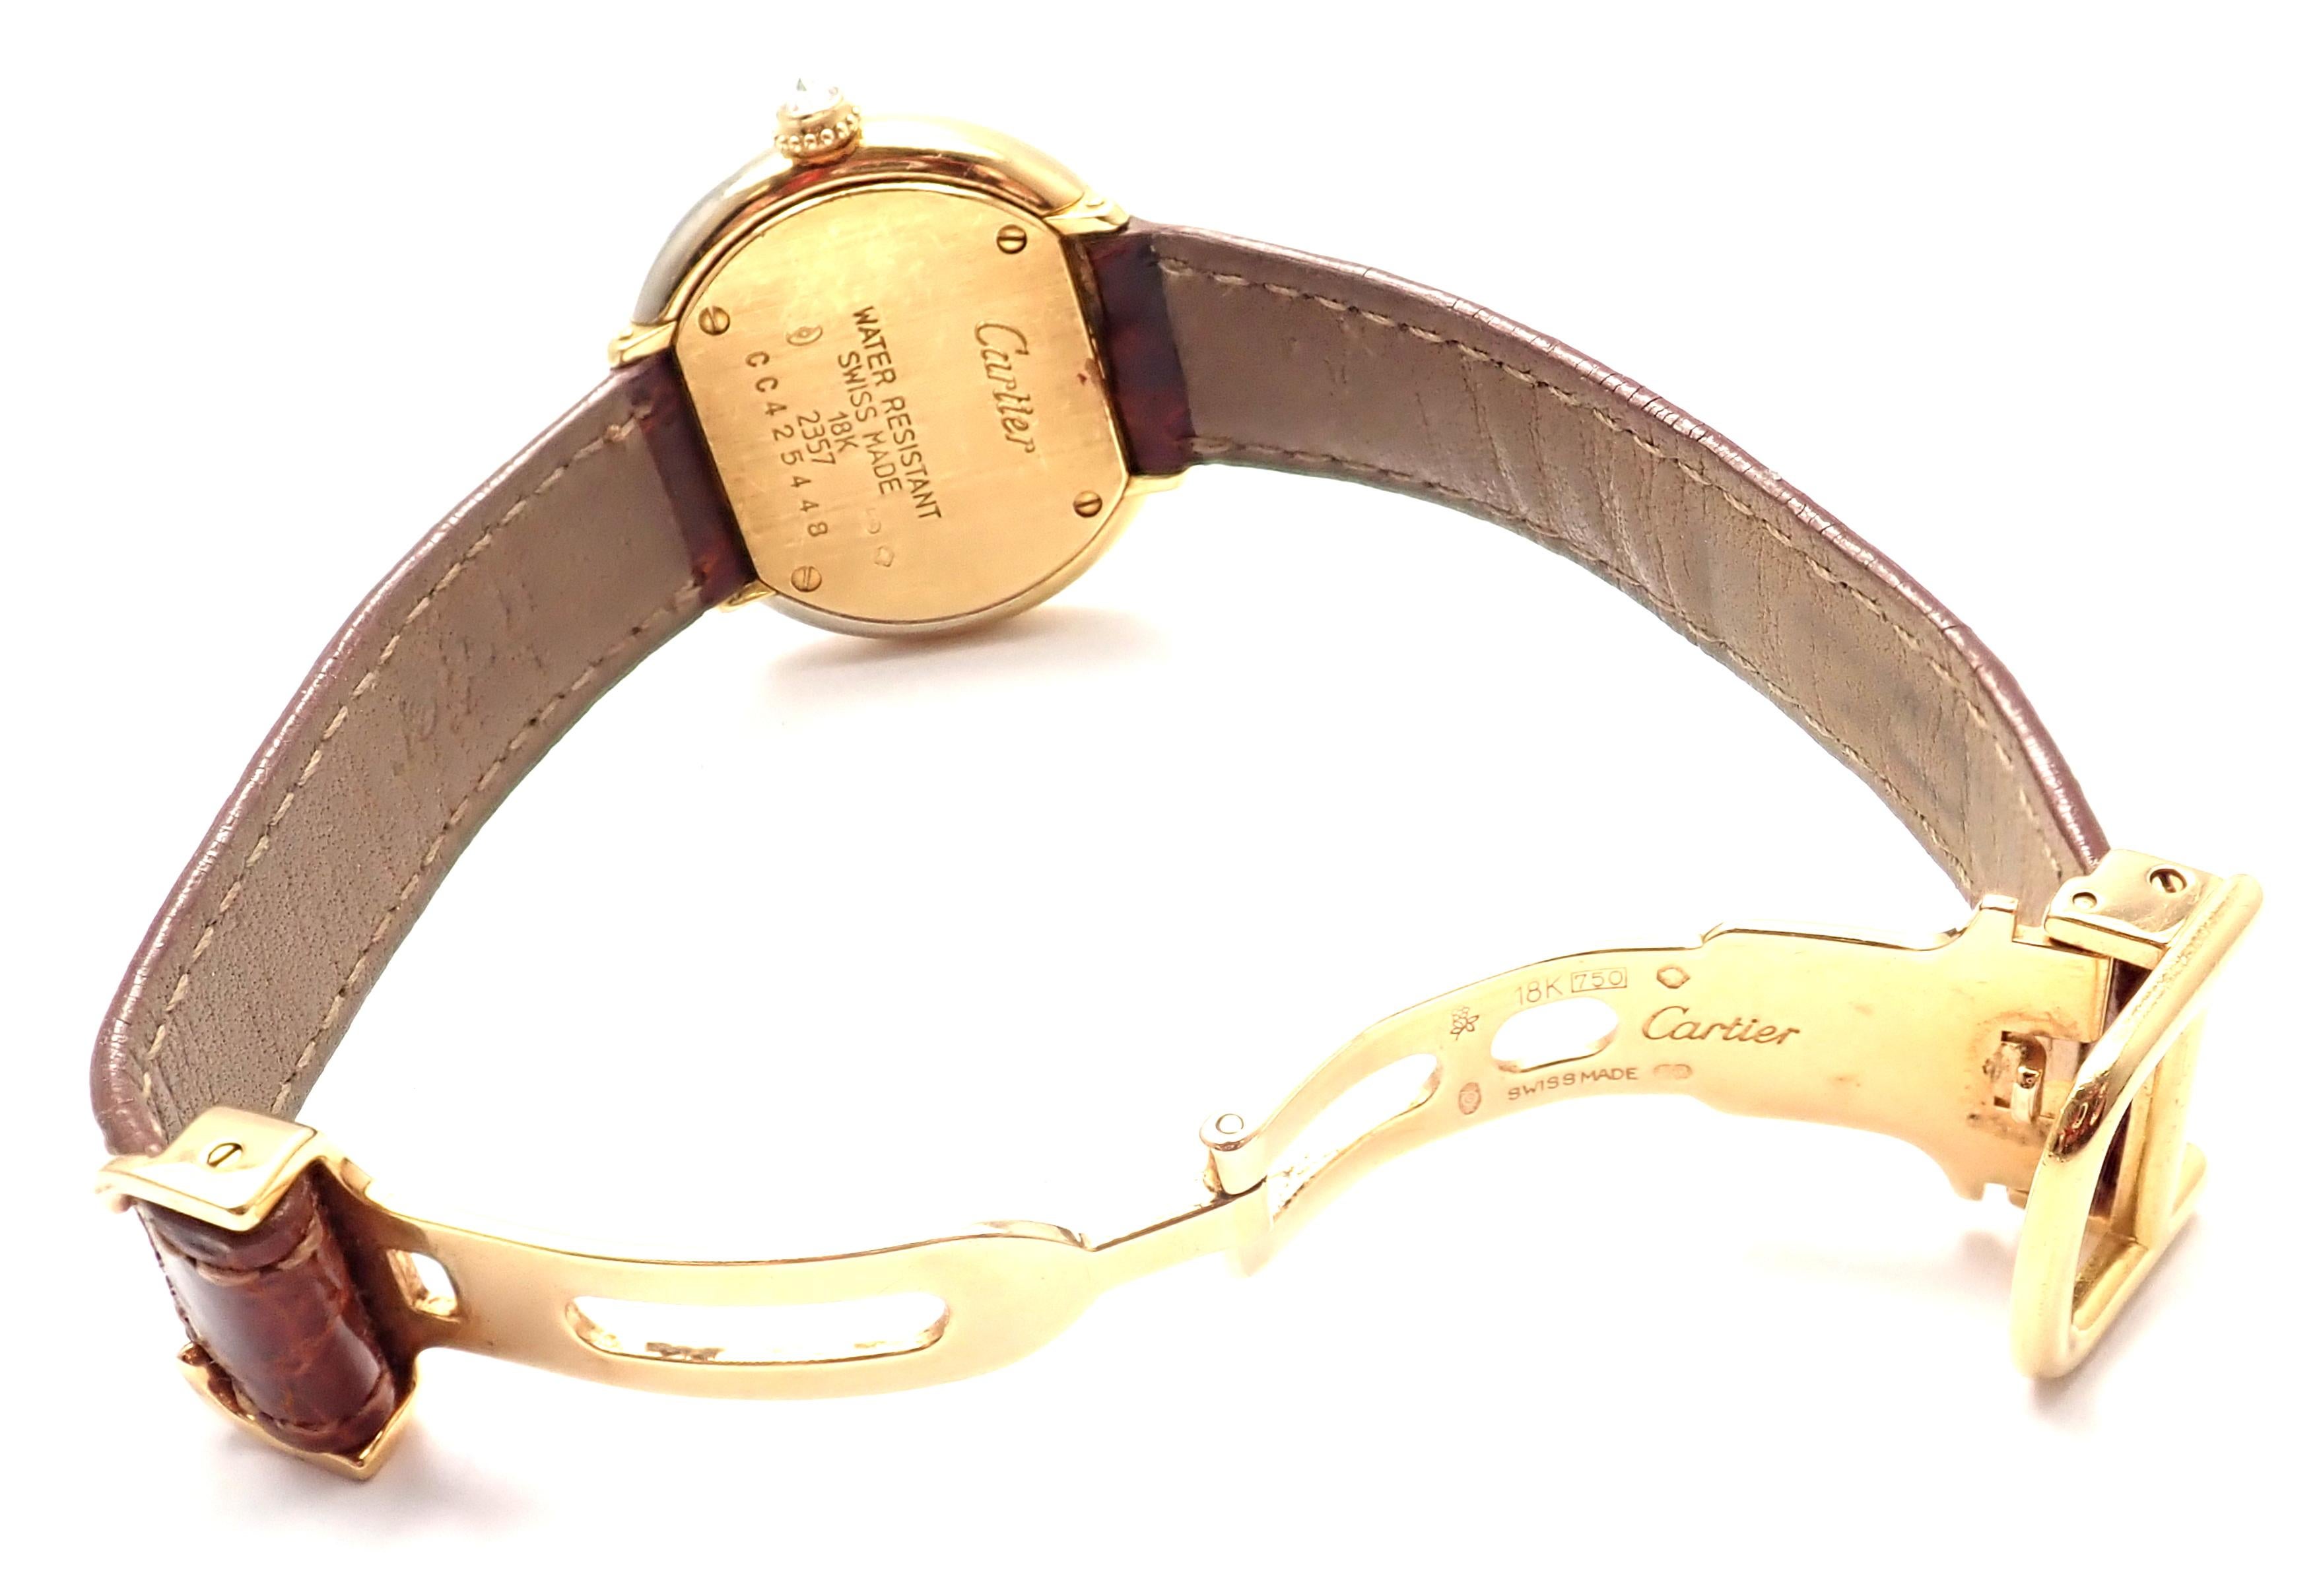 Brilliant Cut Cartier Trinity Diamond Tri-Color Gold Watch